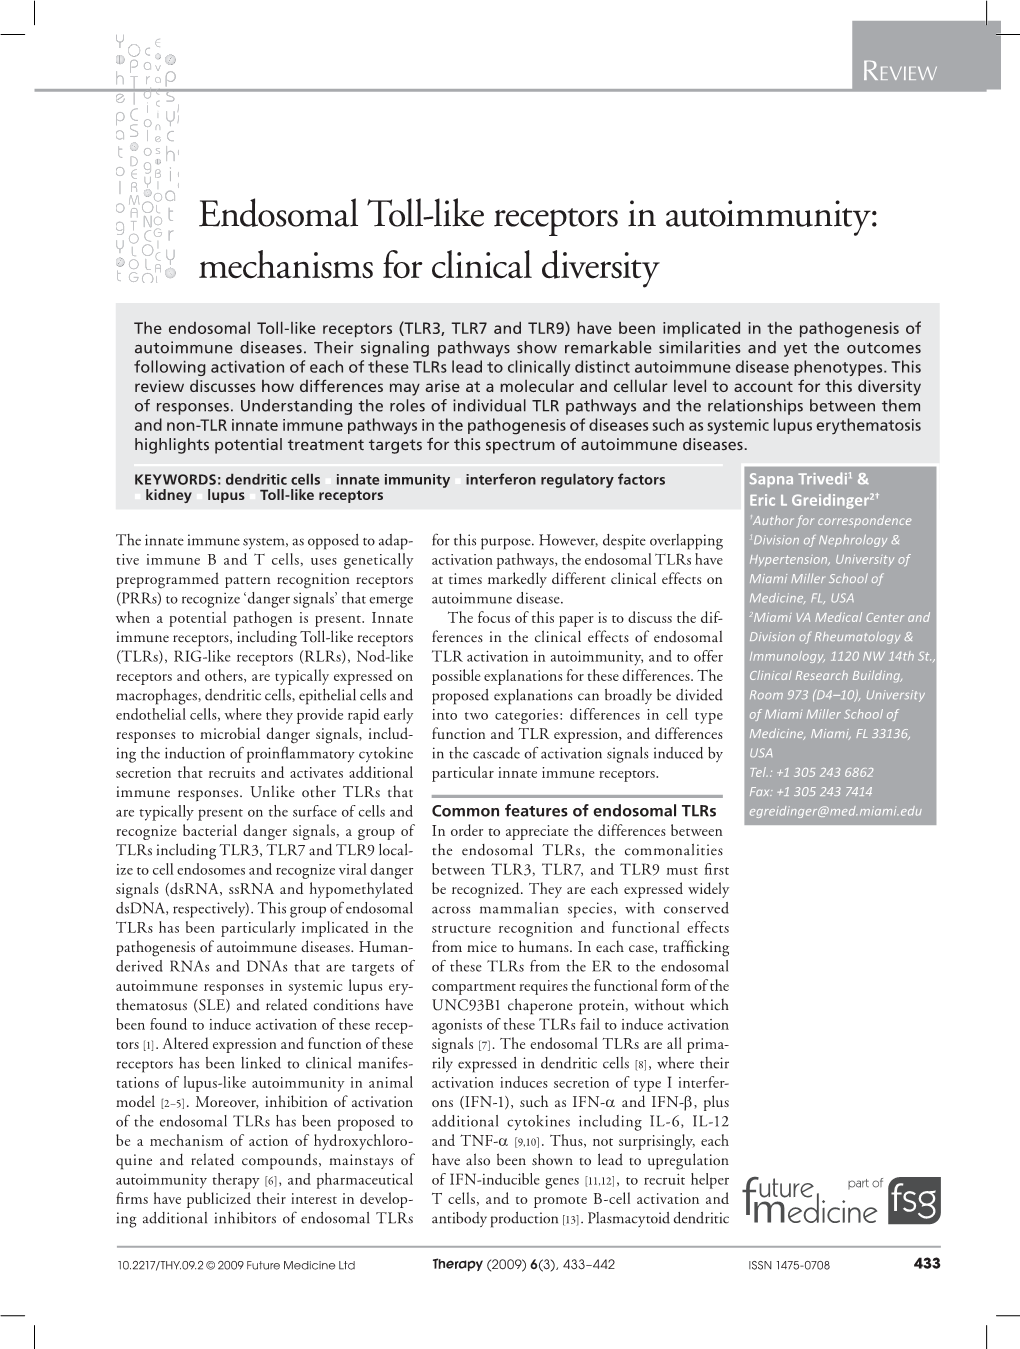 Endosomal Toll-Like Receptors in Autoimmunity: Mechanisms for Clinical Diversity